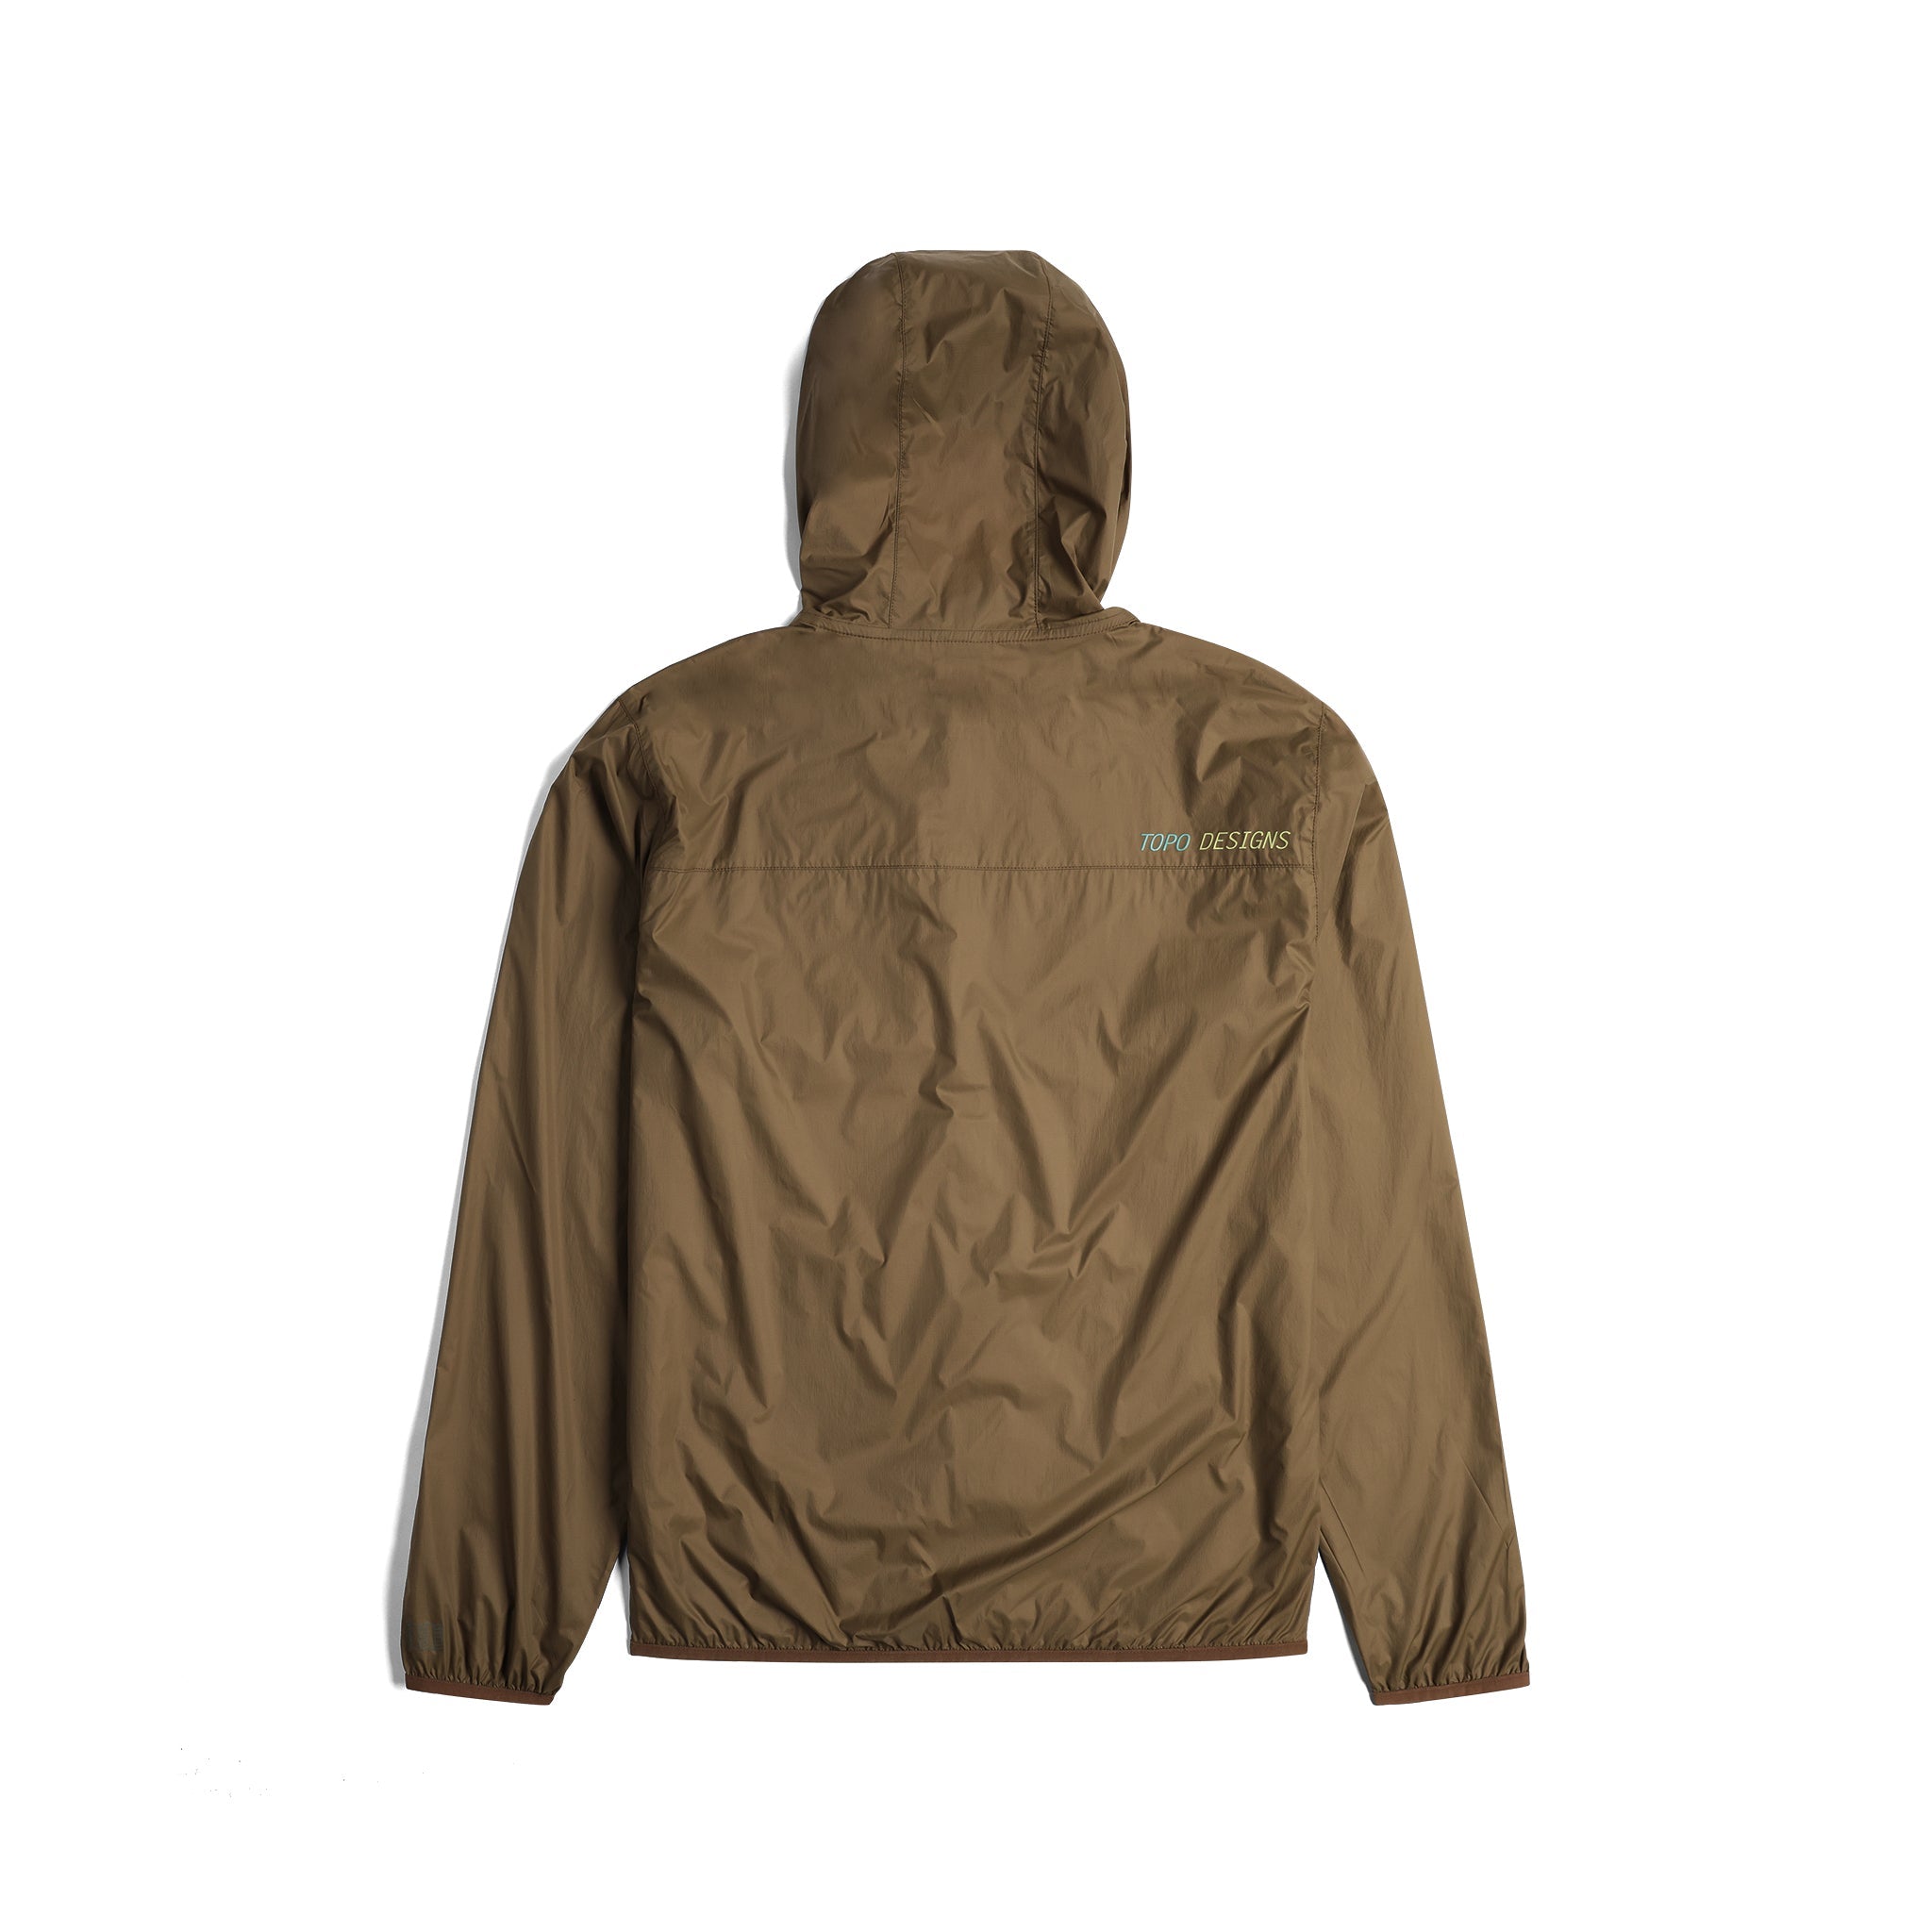 Back View of Topo Designs Global Ultralight Packable Jacket - Men's in "Desert Palm"